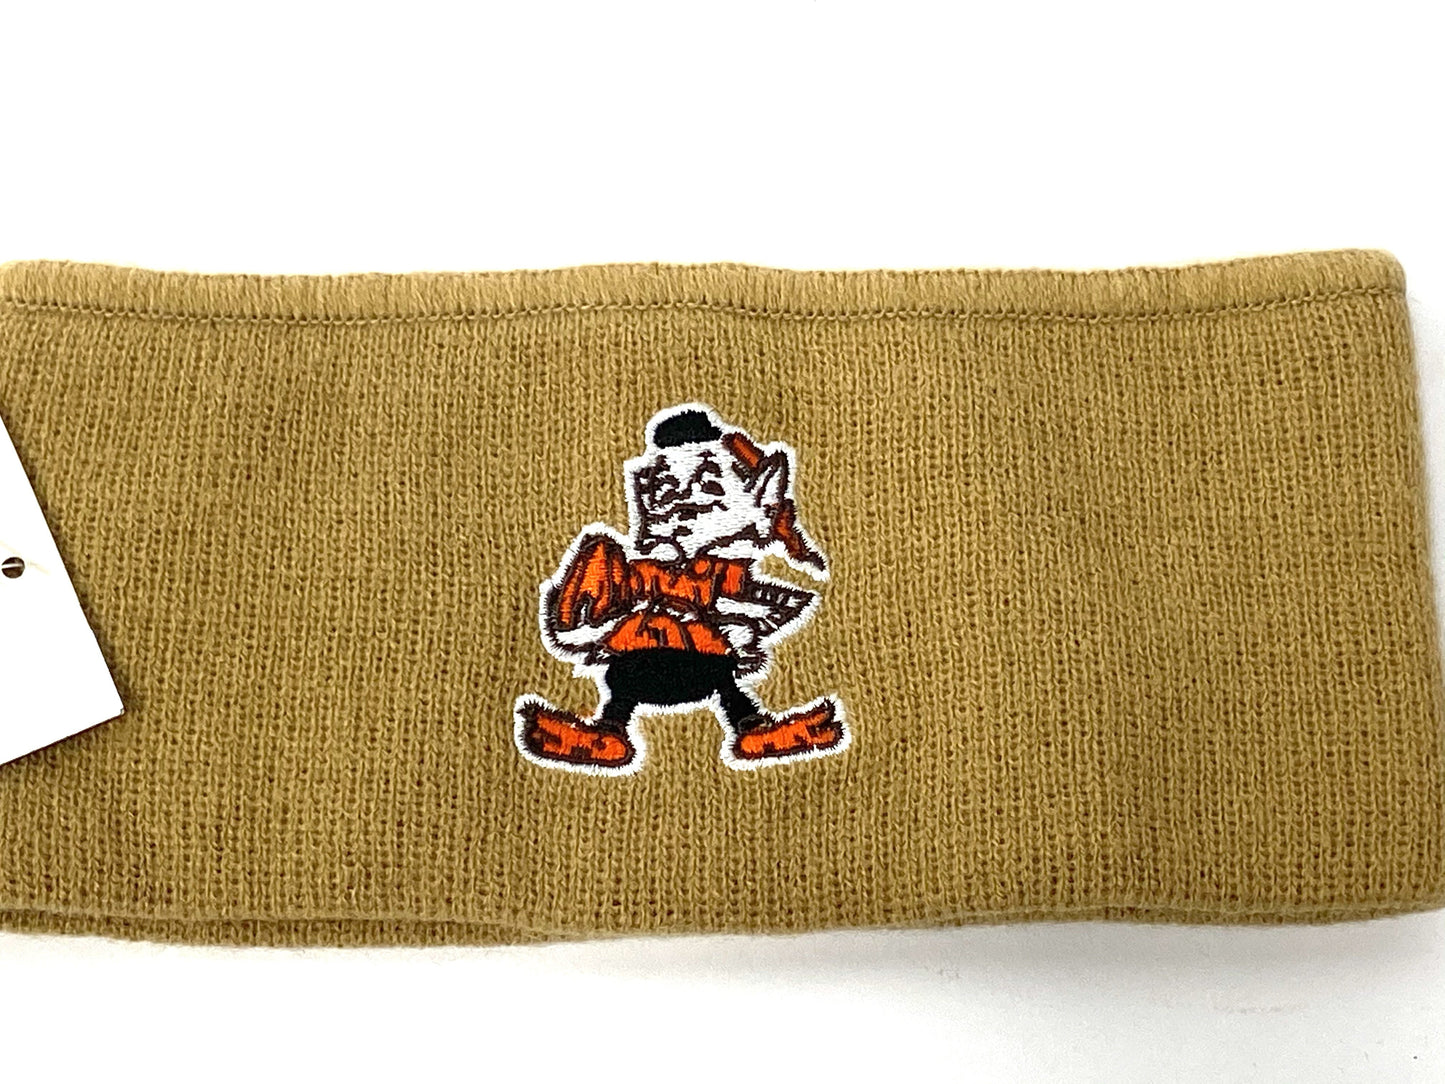 Cleveland Browns Vintage NFL Tan Elf Headband by Rossmor Industries